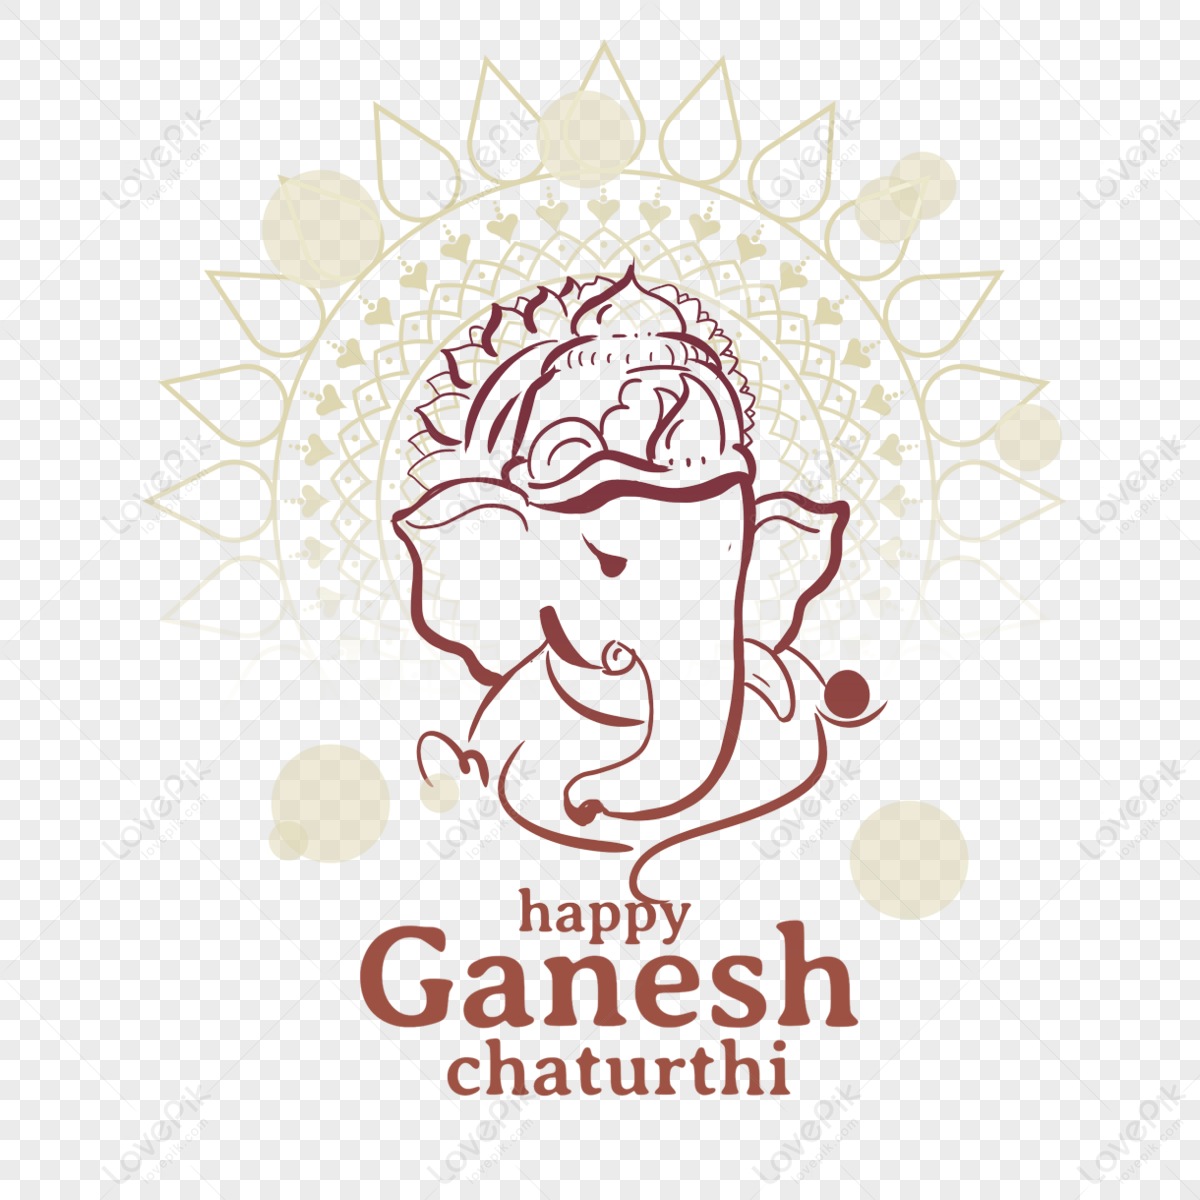 Golden Ganesha PNG Transparent, Beautiful Golden Ganesha Design, Drawn  Ganesha, Drawn Illustration, Vector Hand PNG Image For Free Download |  Ganesha, Free hand rangoli design, Free hand rangoli